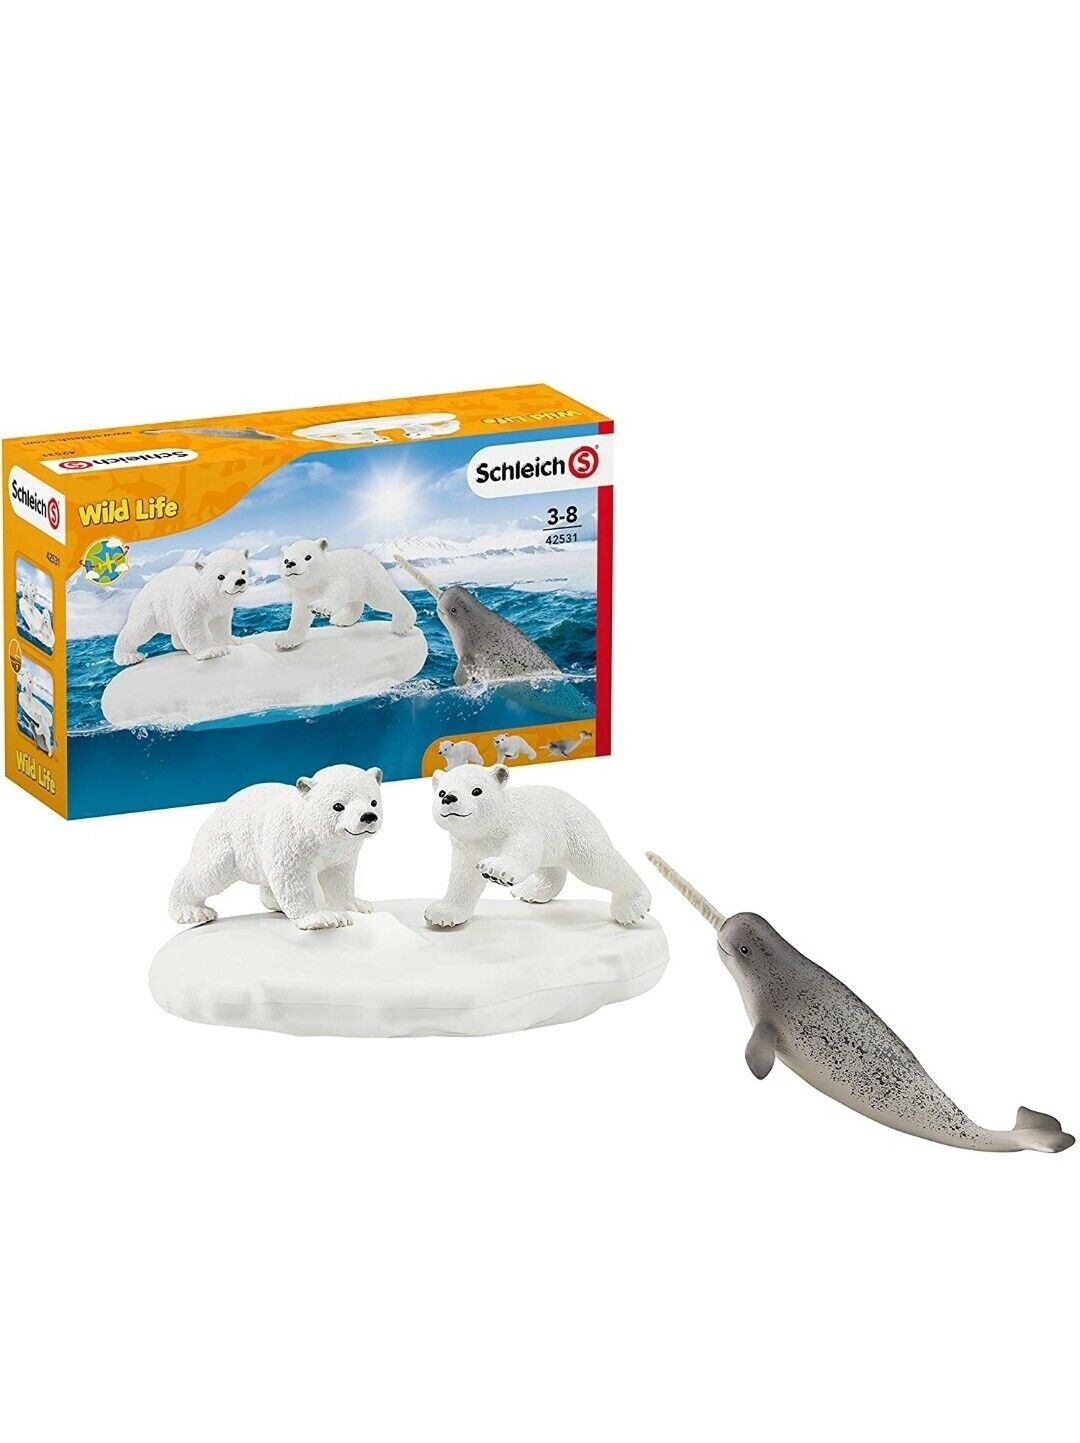 SCHLEICH Polar Bear Playground with Narwal Item# 42531 Wild Life Series - NEW